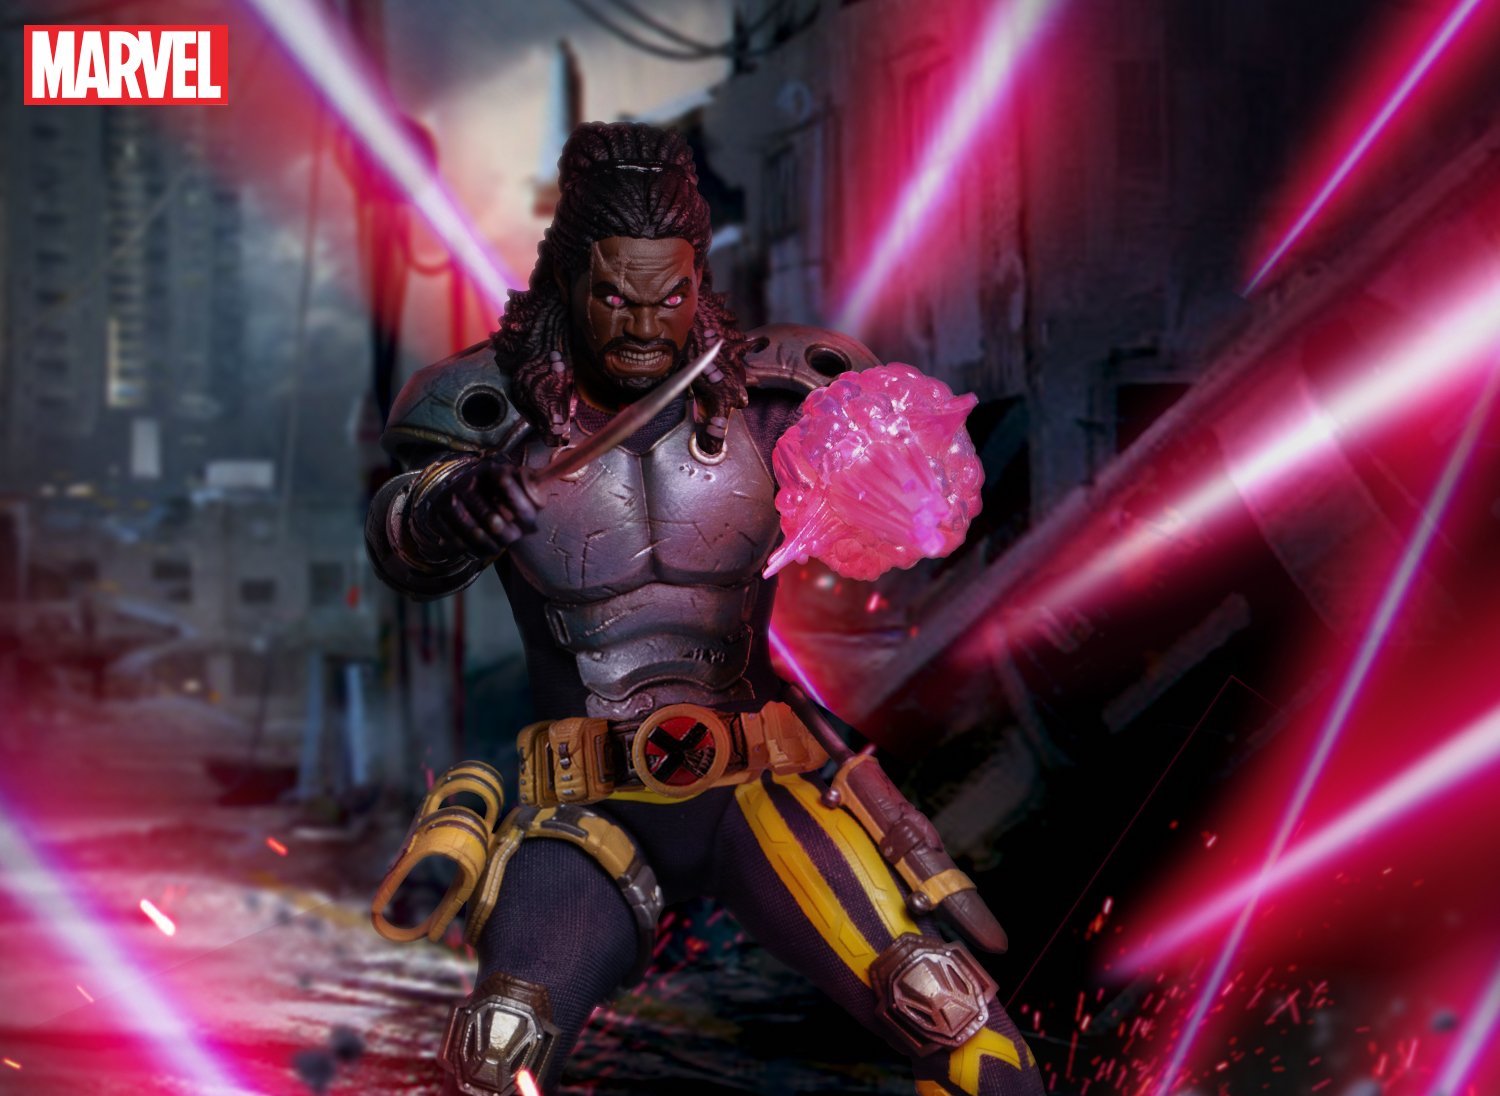 Mezco Toyz unveils X-Men One:12 Collective Bishop